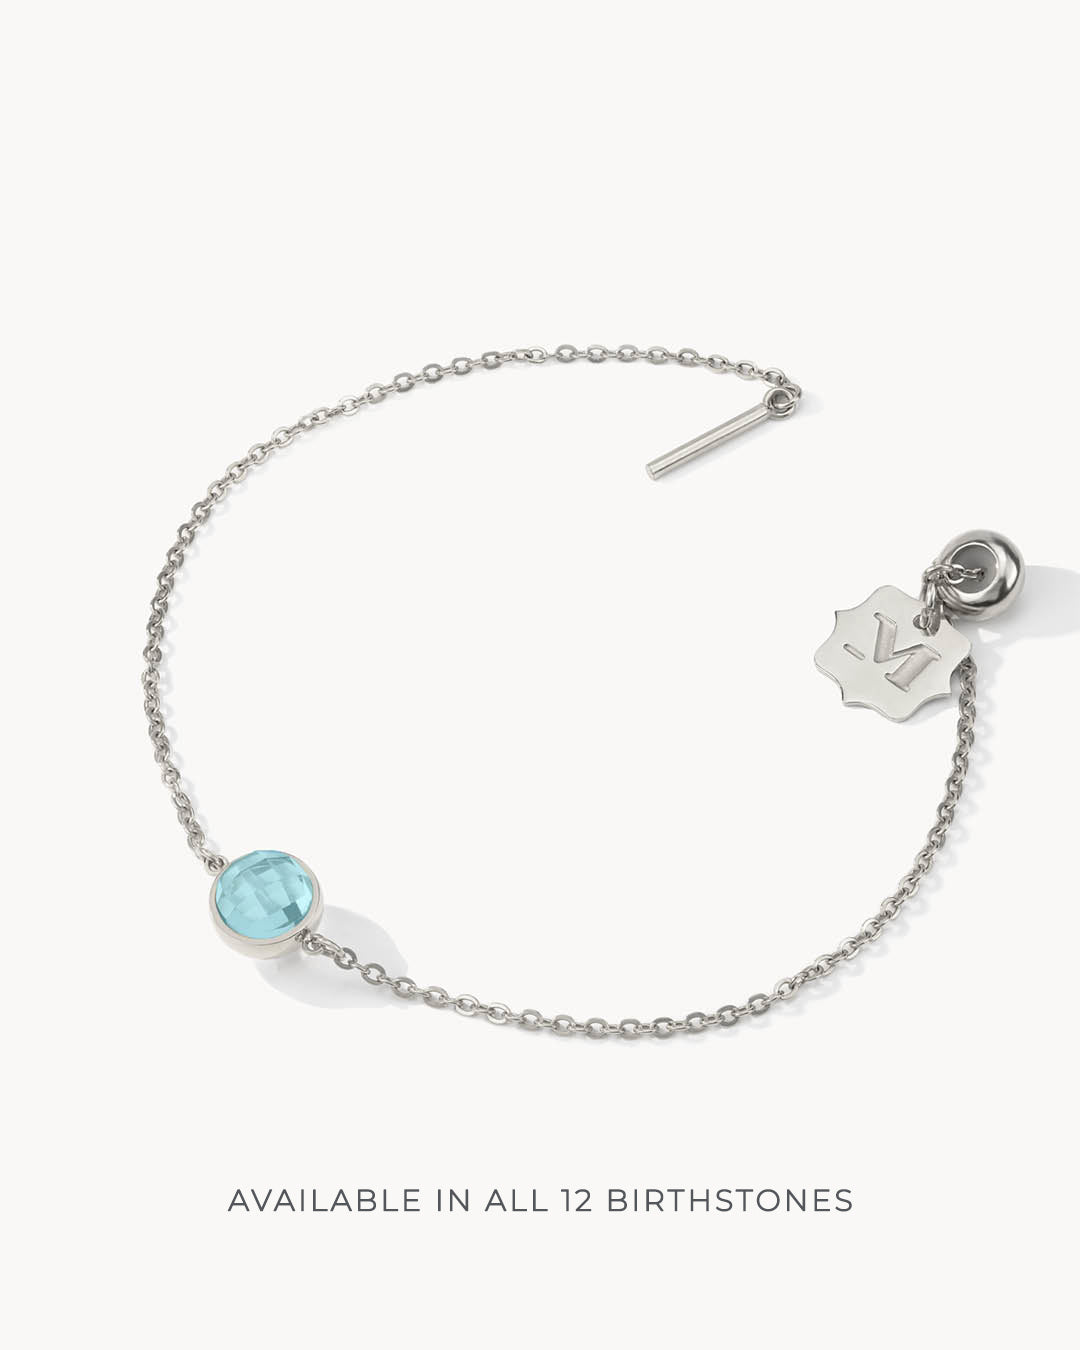   Birthstone Signature Bracelet Set, Silver